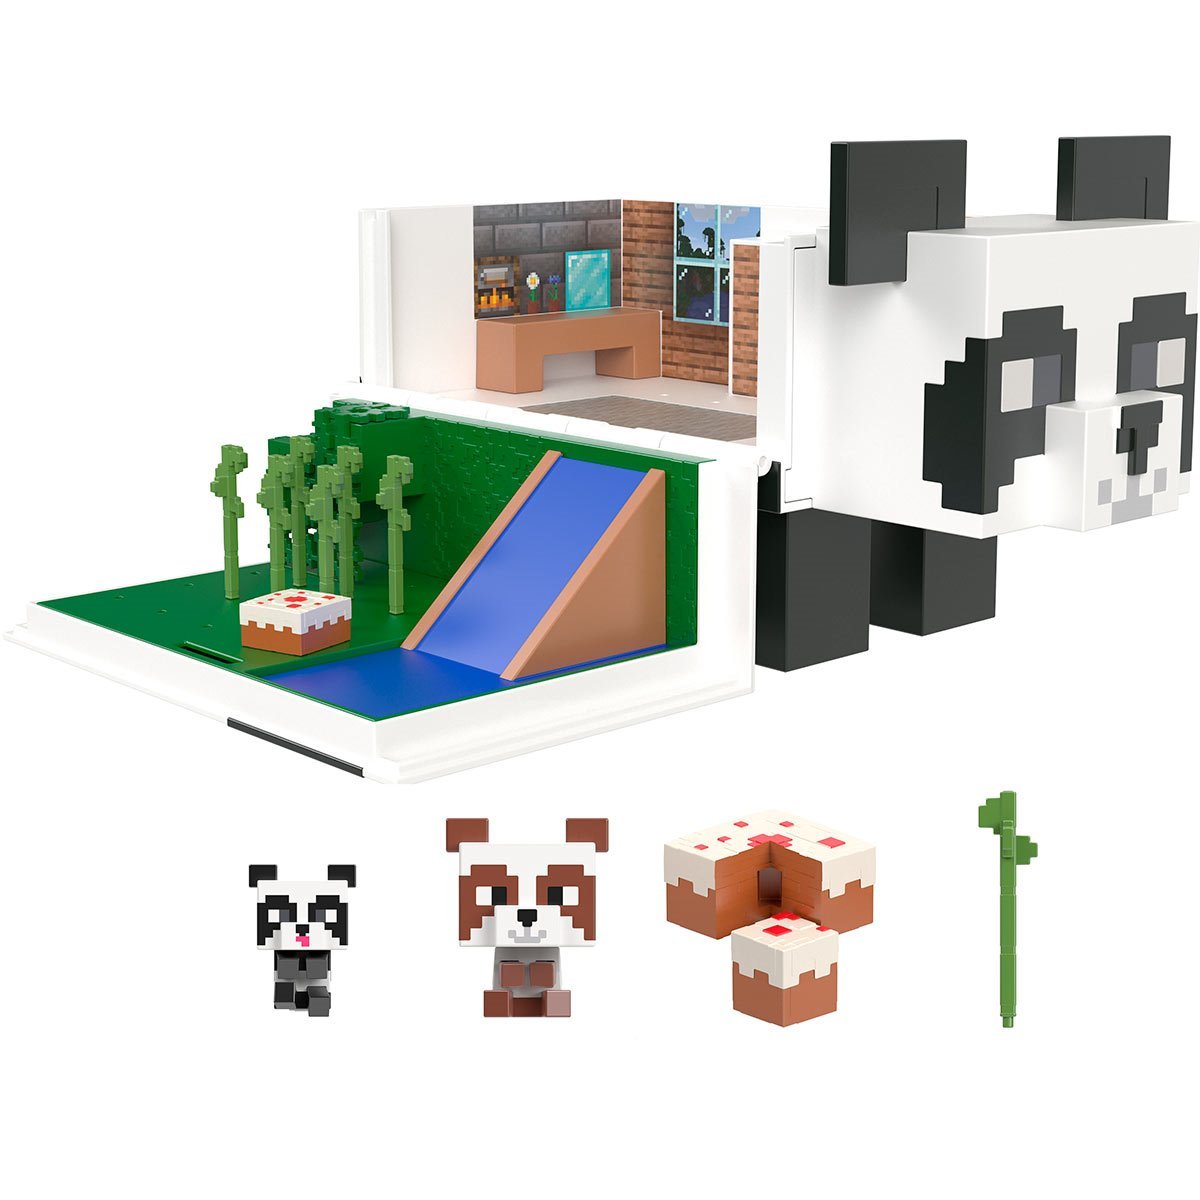 Minecraft Panda 8-Inch Basic Plush - Entertainment Earth